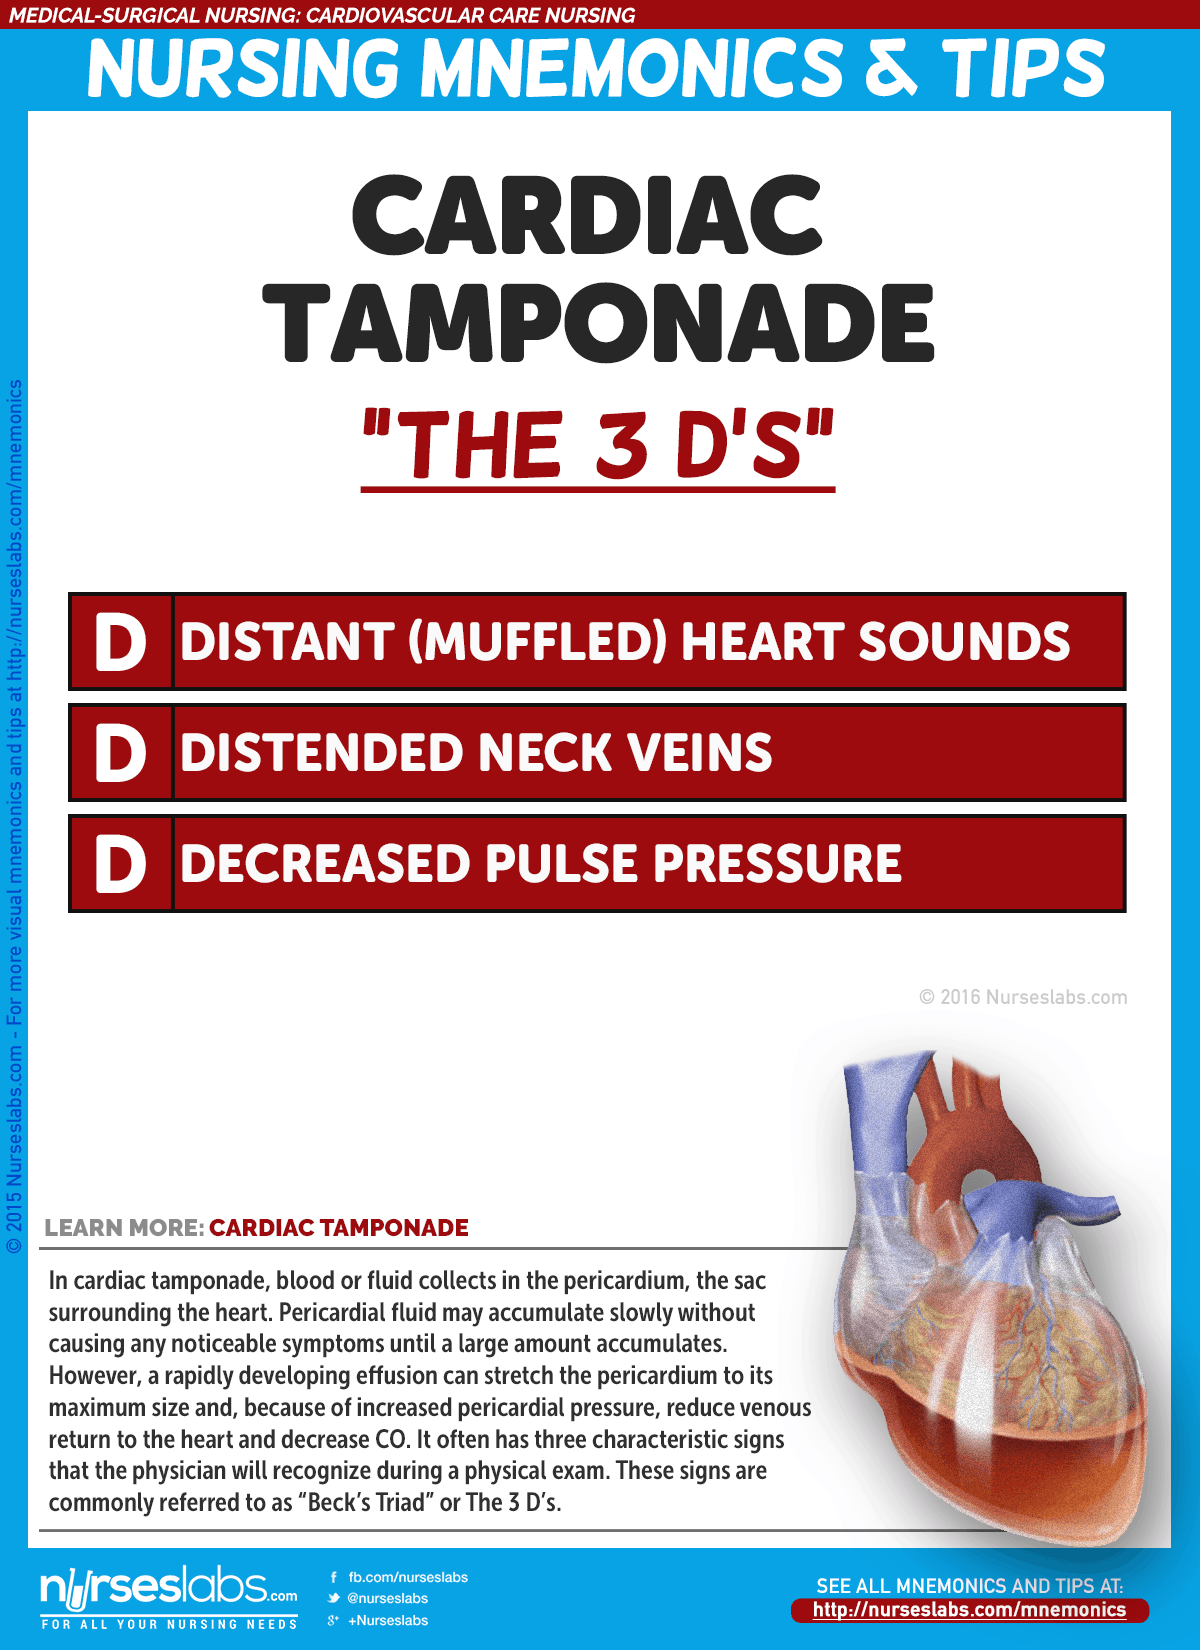 The “3 D’s” Cardiac Tamponade (Beck’s Triad)